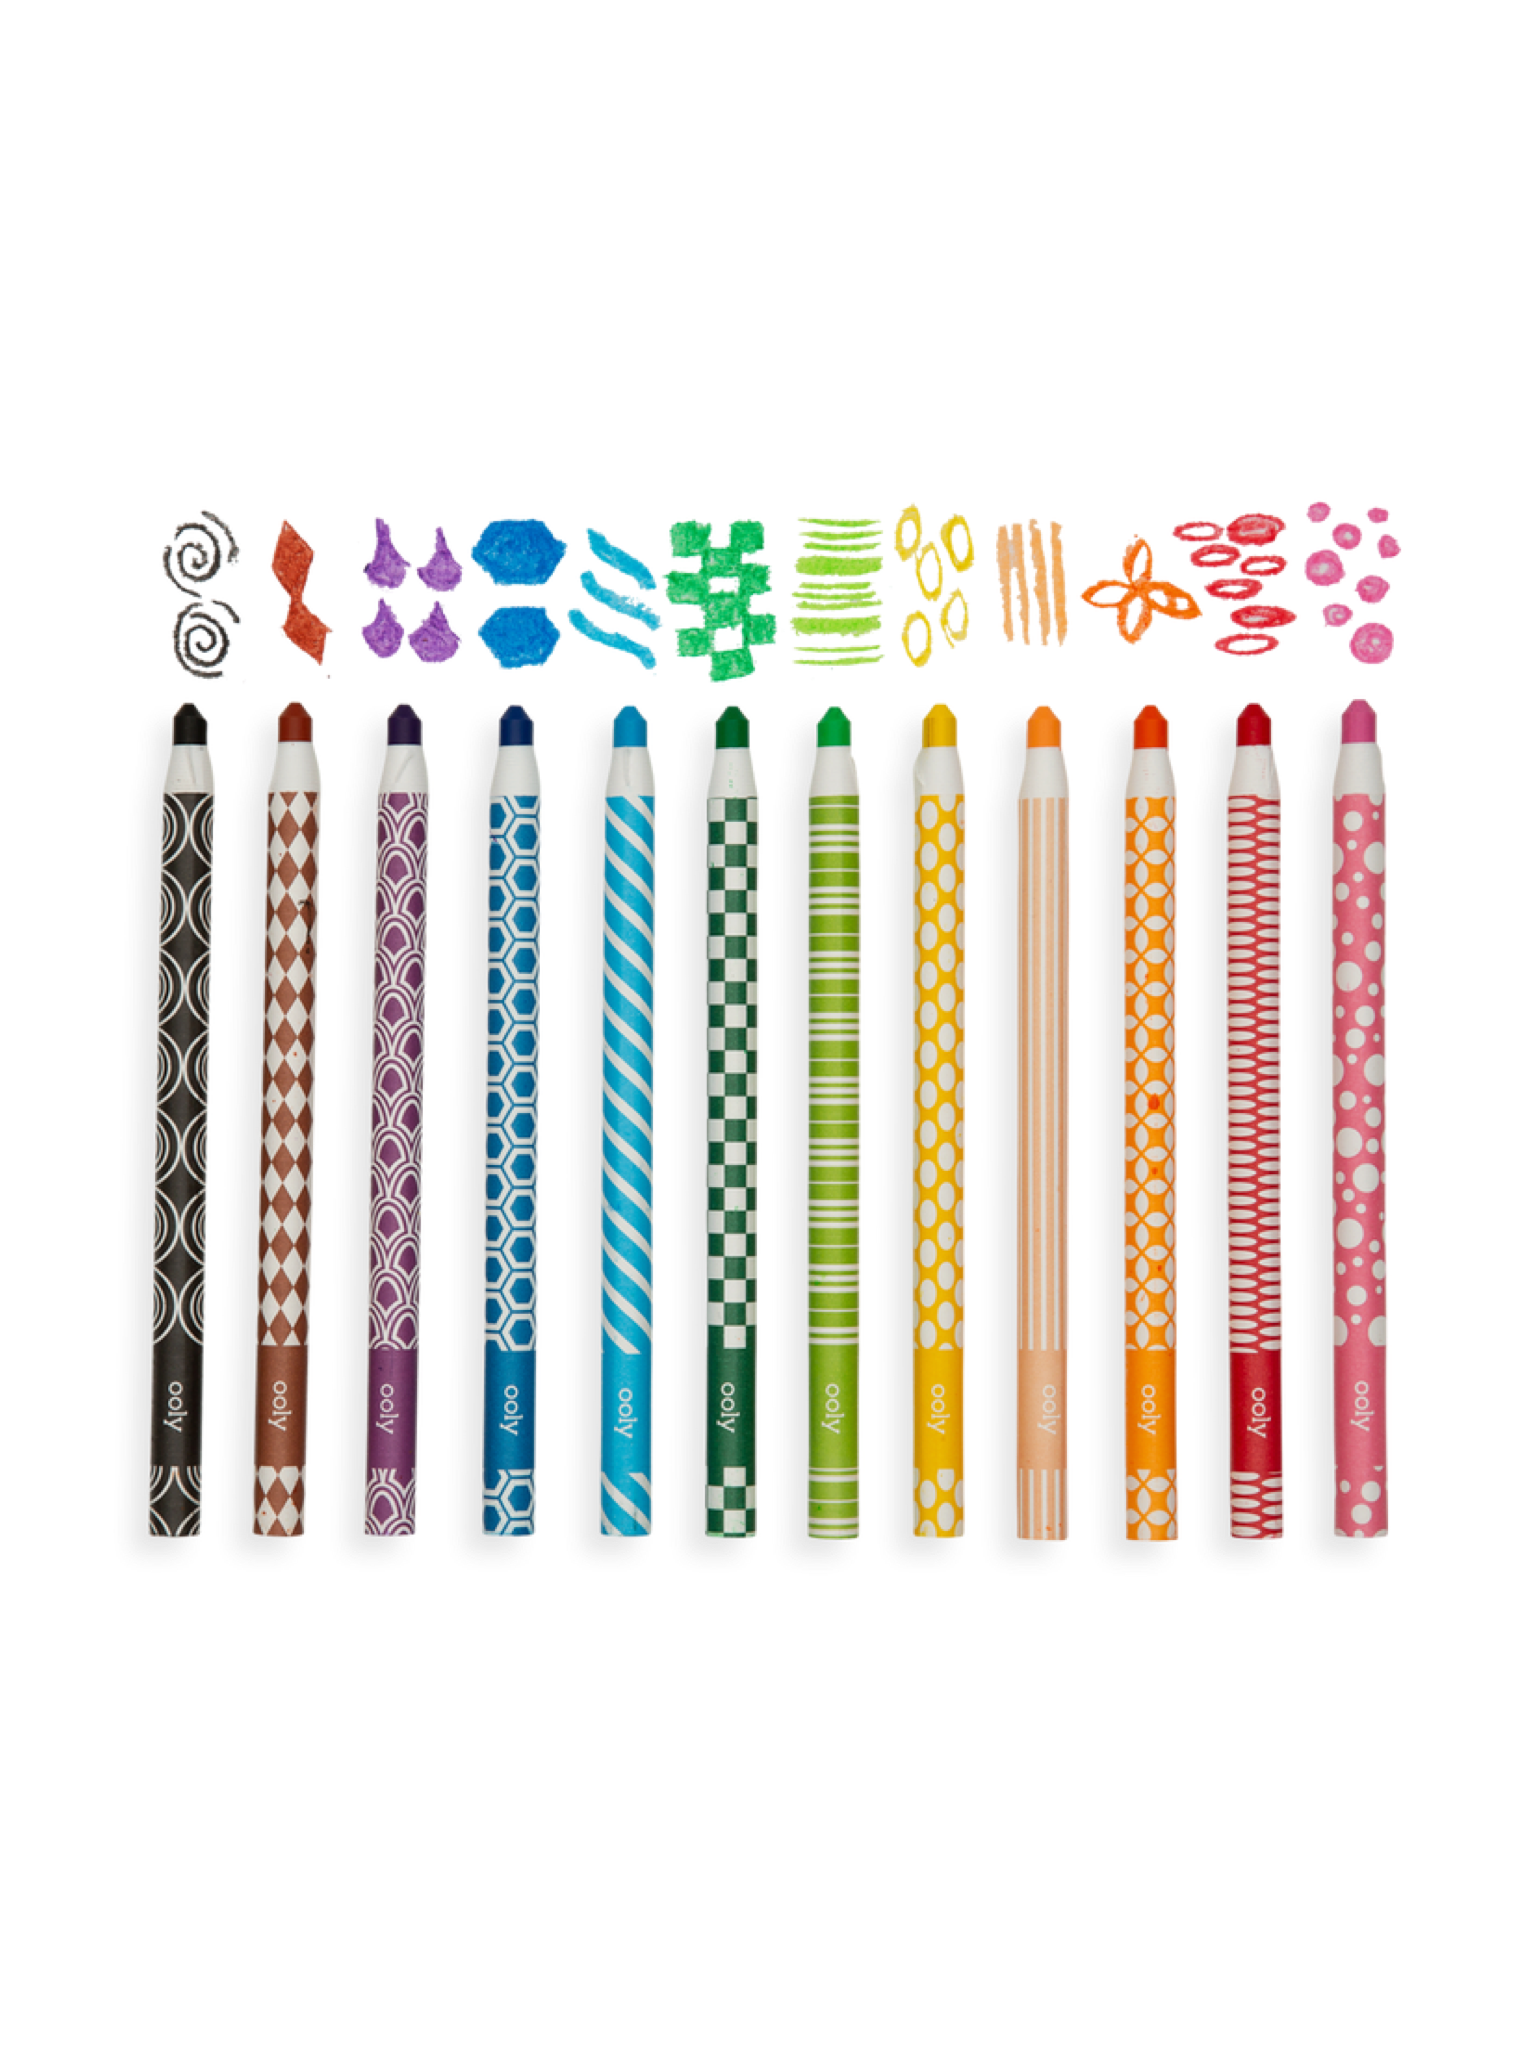 Colour Appeel Crayon Sticks